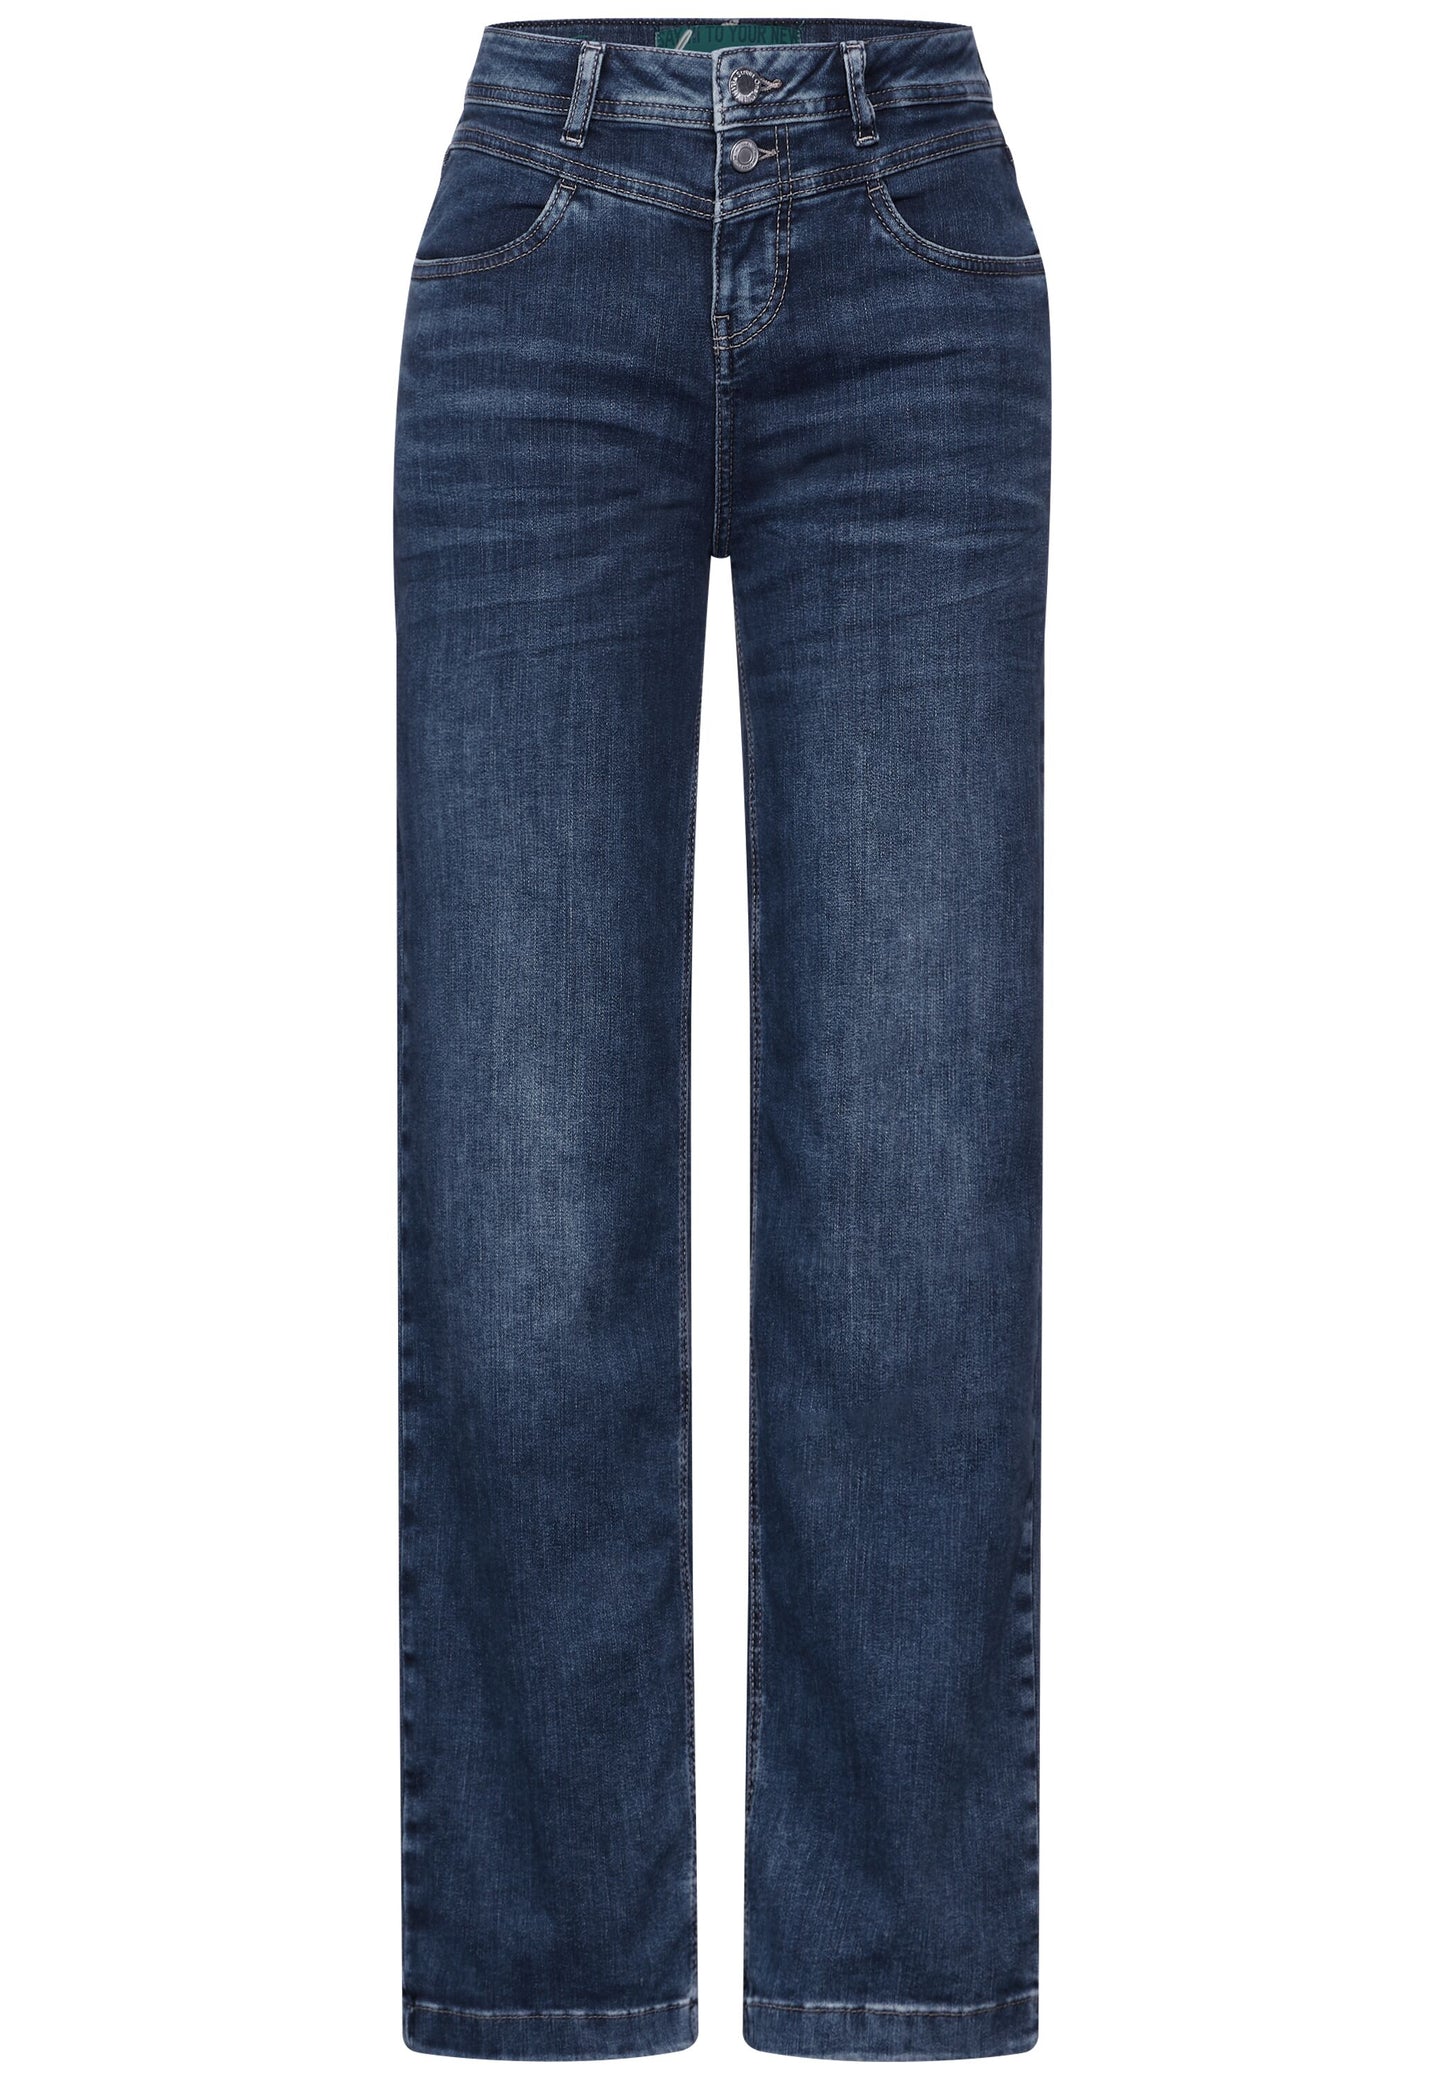 Street One - Wide Leg Jeans - mid blue wash